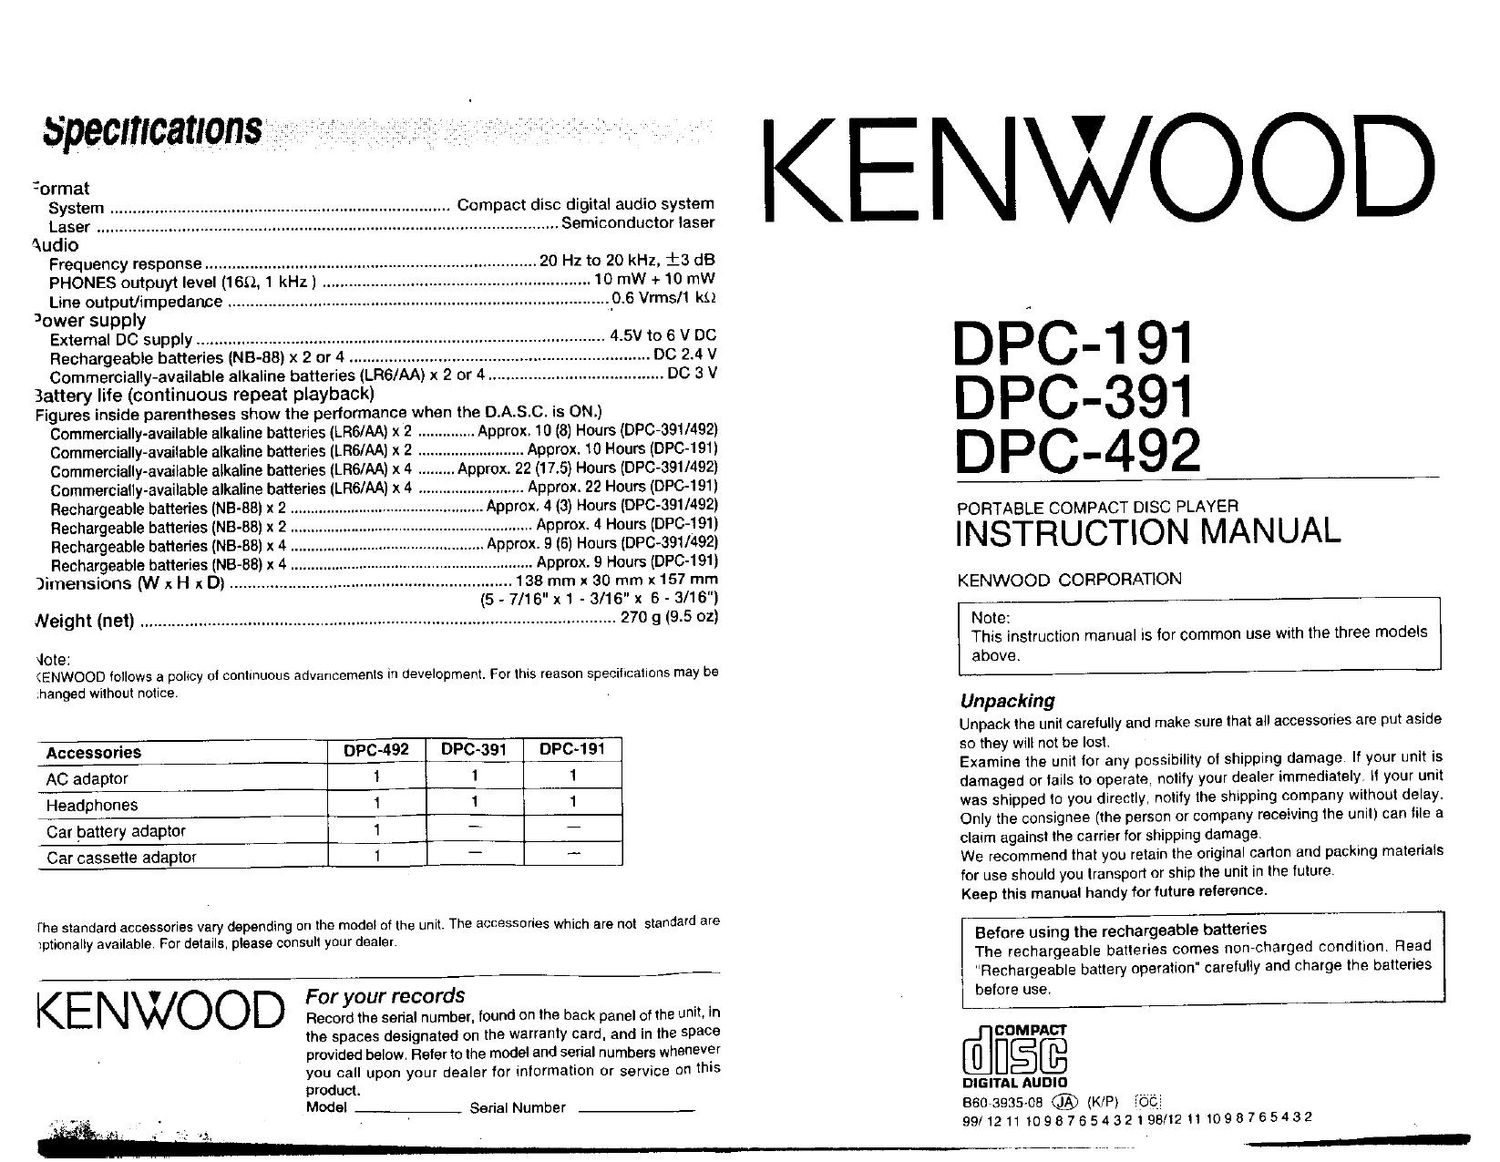 Kenwood DPC 491 Owners Manual